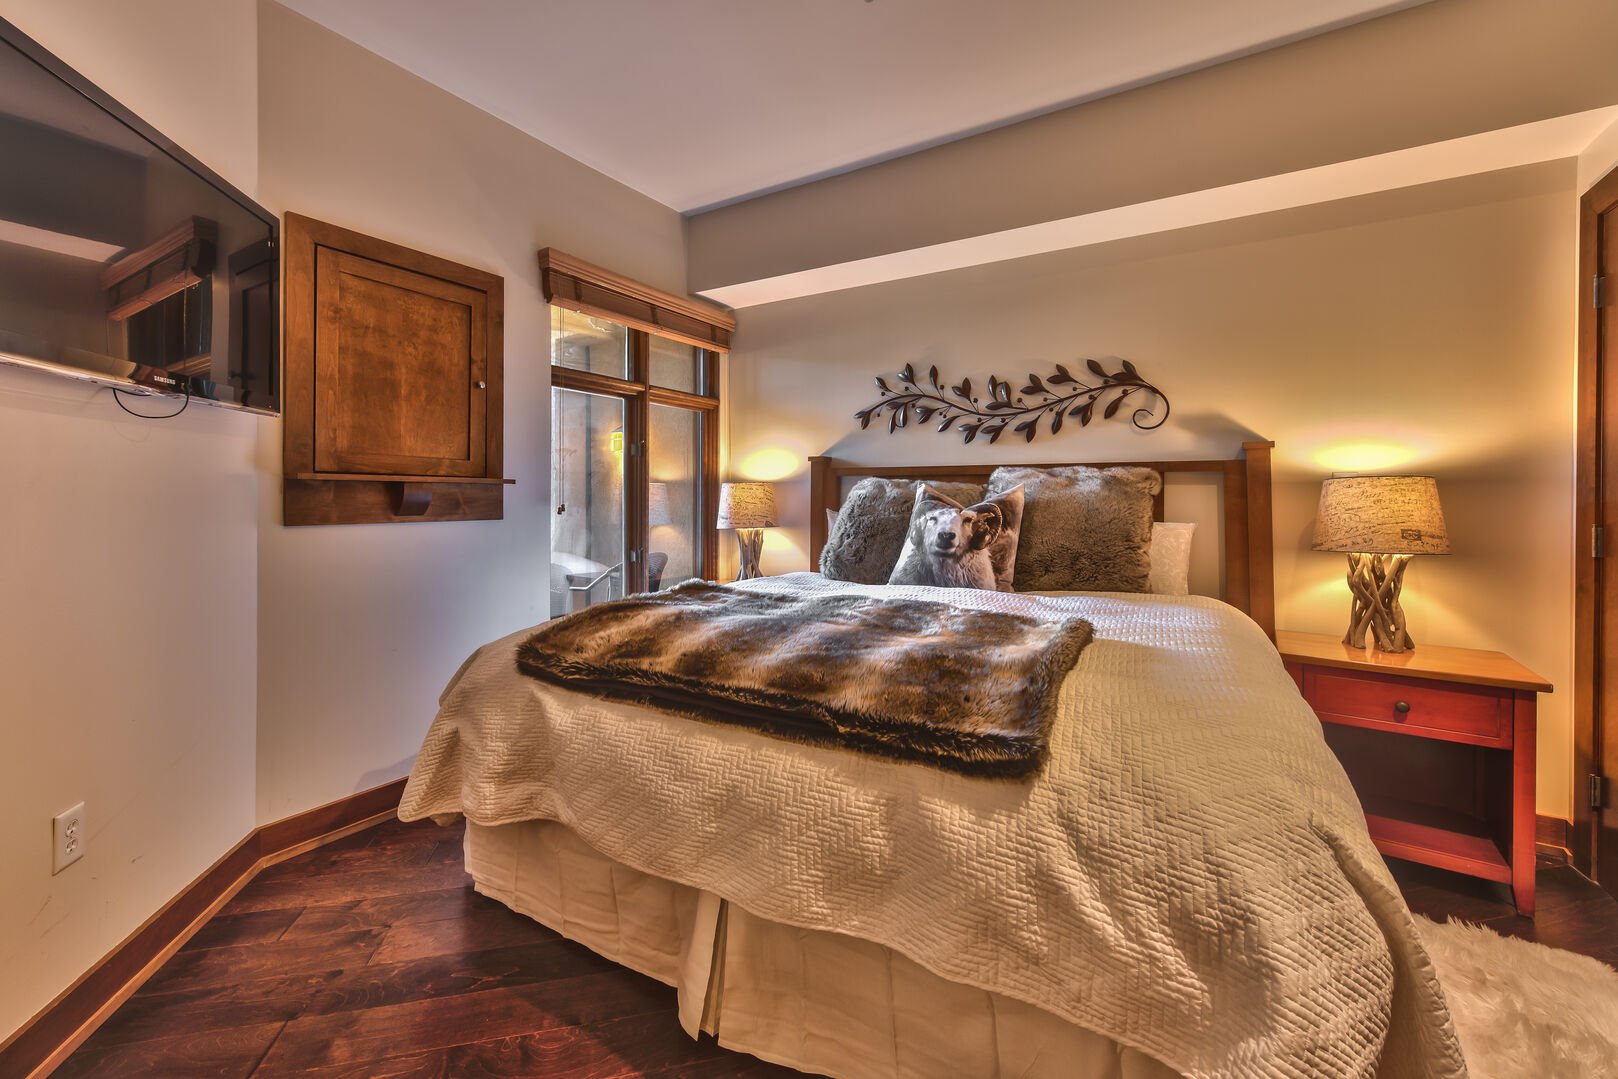 Bedroom features a king bed, European duvet, flat screen TV